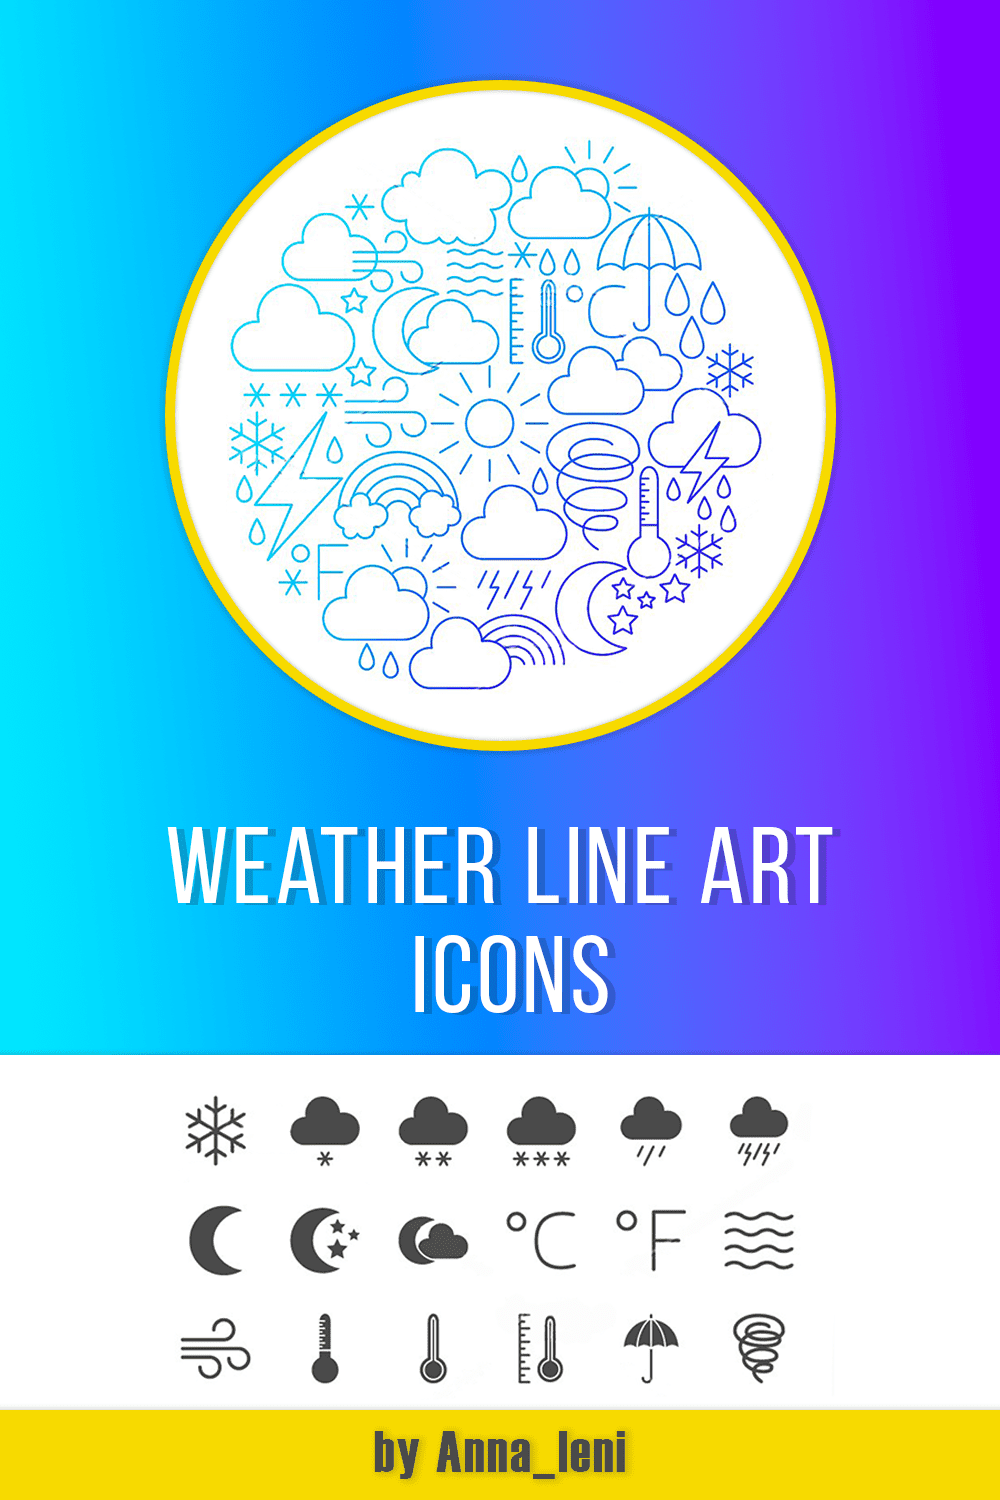 weather line art icons pinterest